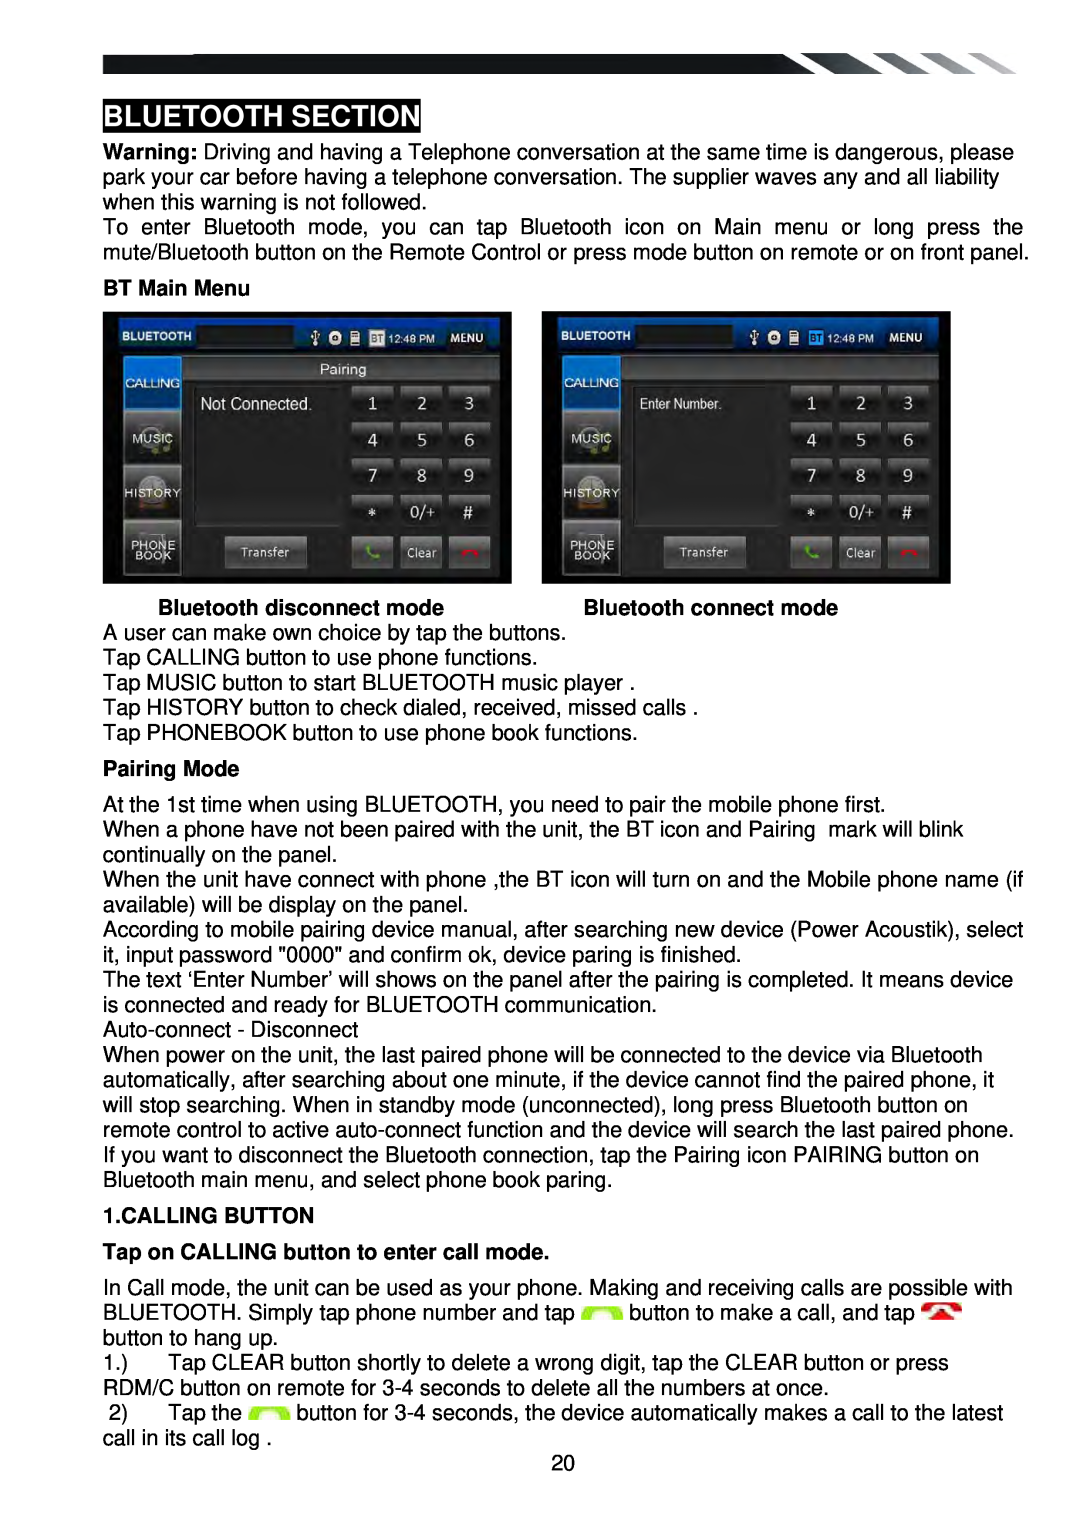 Power Acoustik PTID-6250B Bluetooth Section, BT Main Menu, Bluetooth disconnect mode, Pairing Mode, Calling Button 